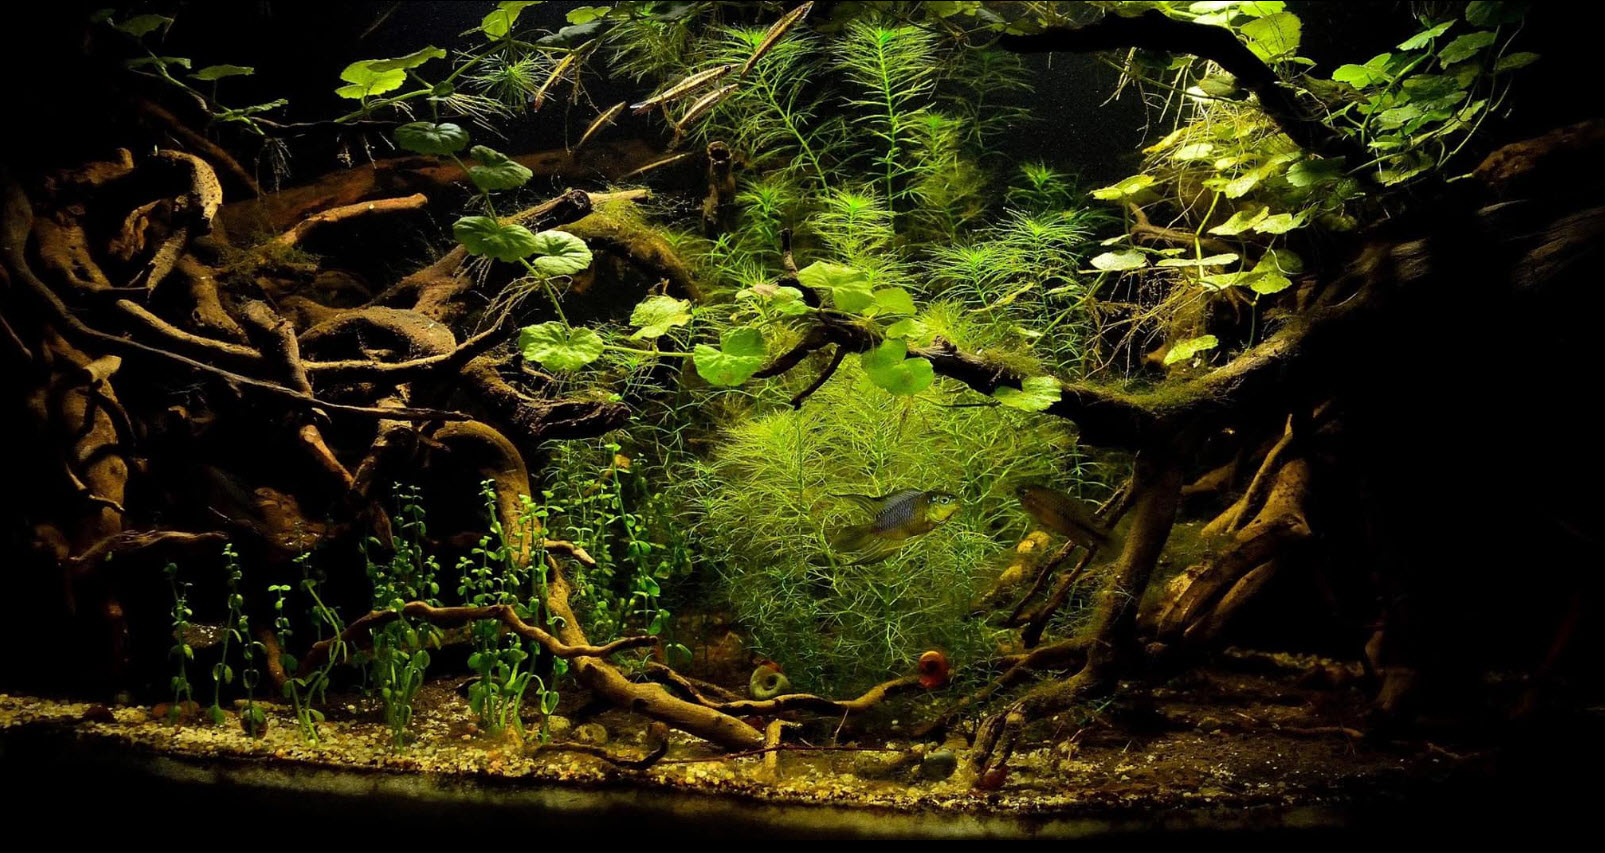 Wood in an Aquarium